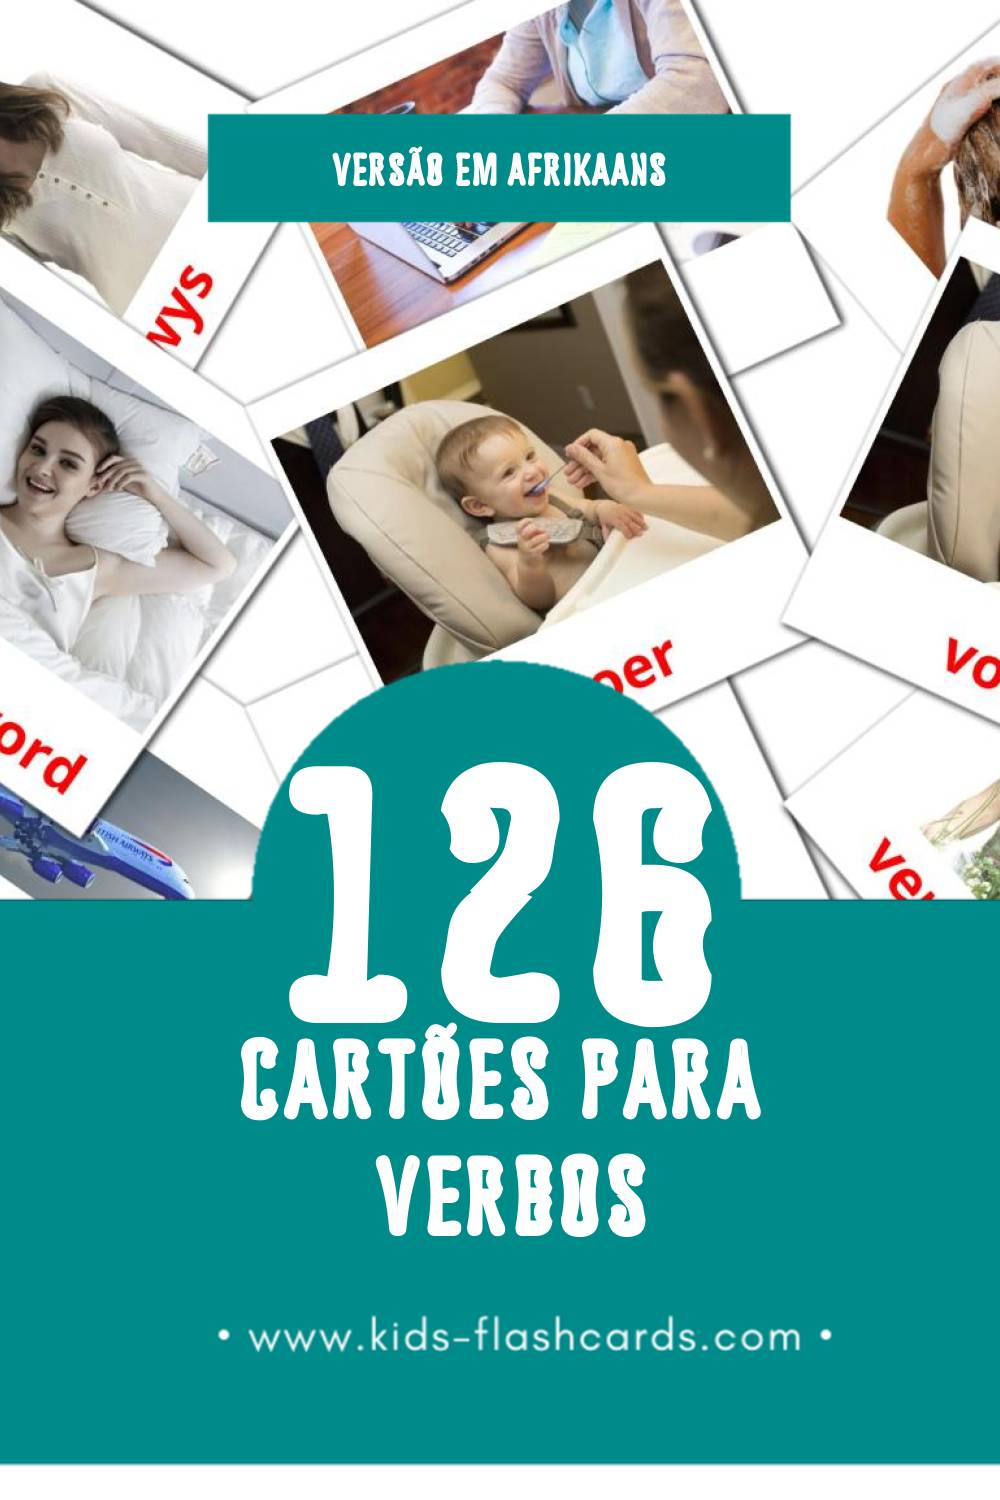 Flashcards de Werkwoorde Visuais para Toddlers (126 cartões em Afrikaans)